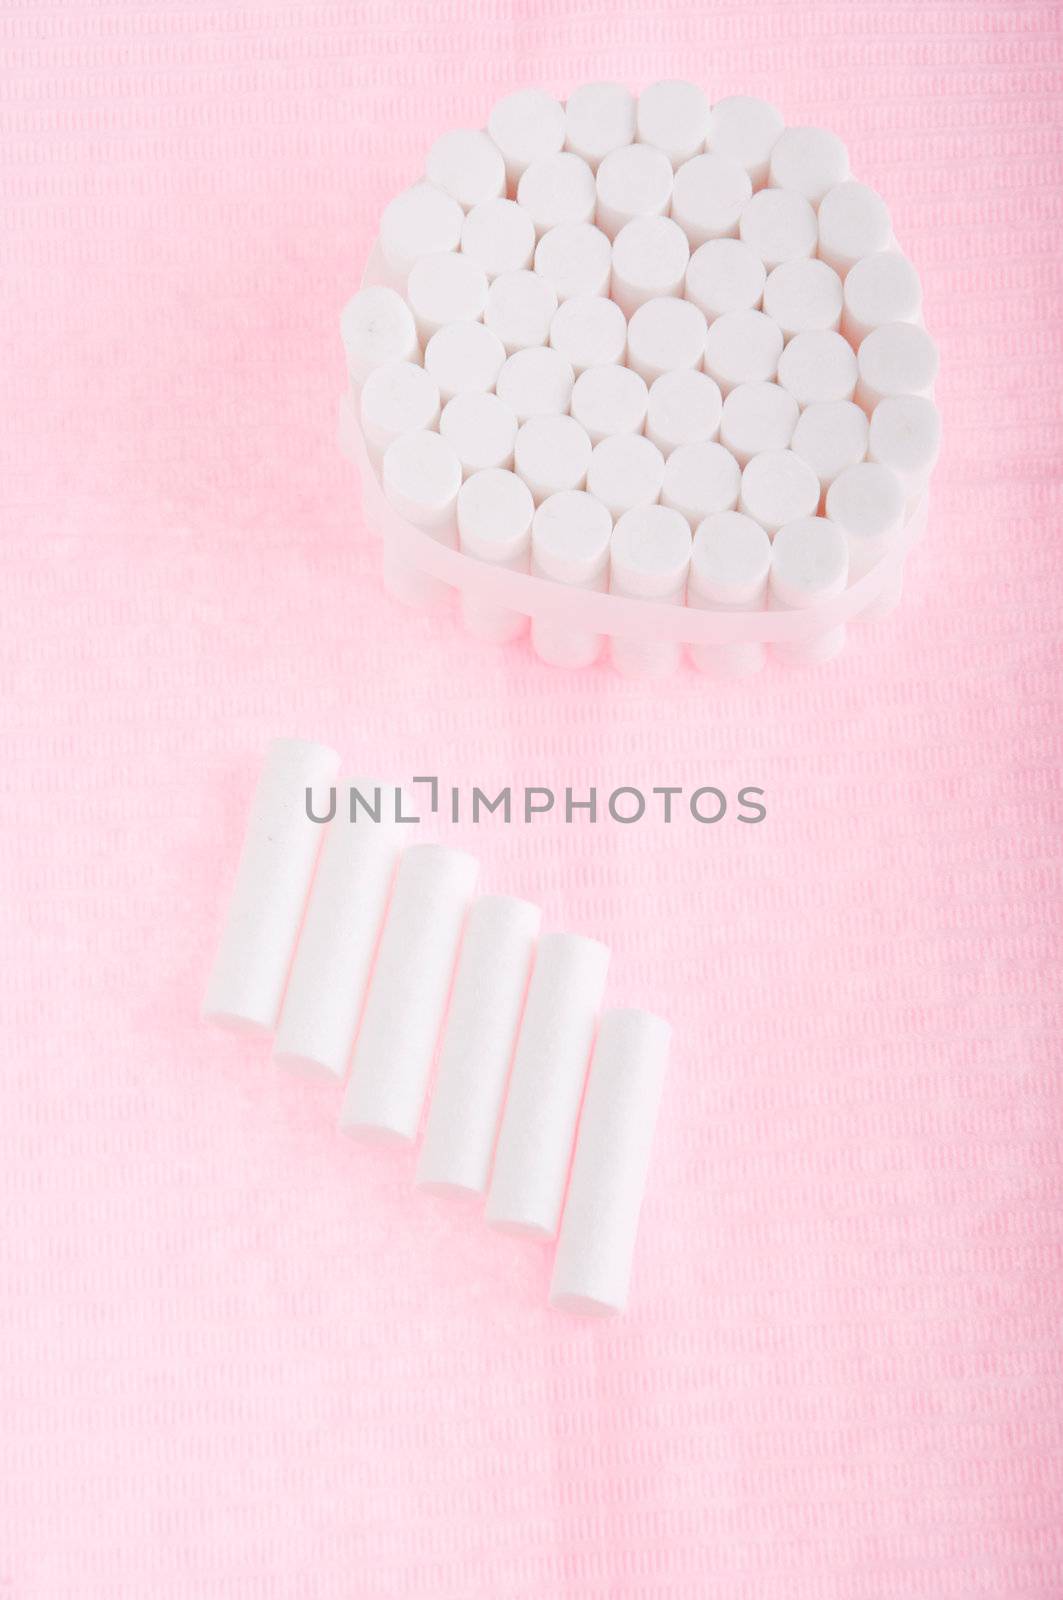 dental cotton rolls on a pink bib (dentistry equipment)